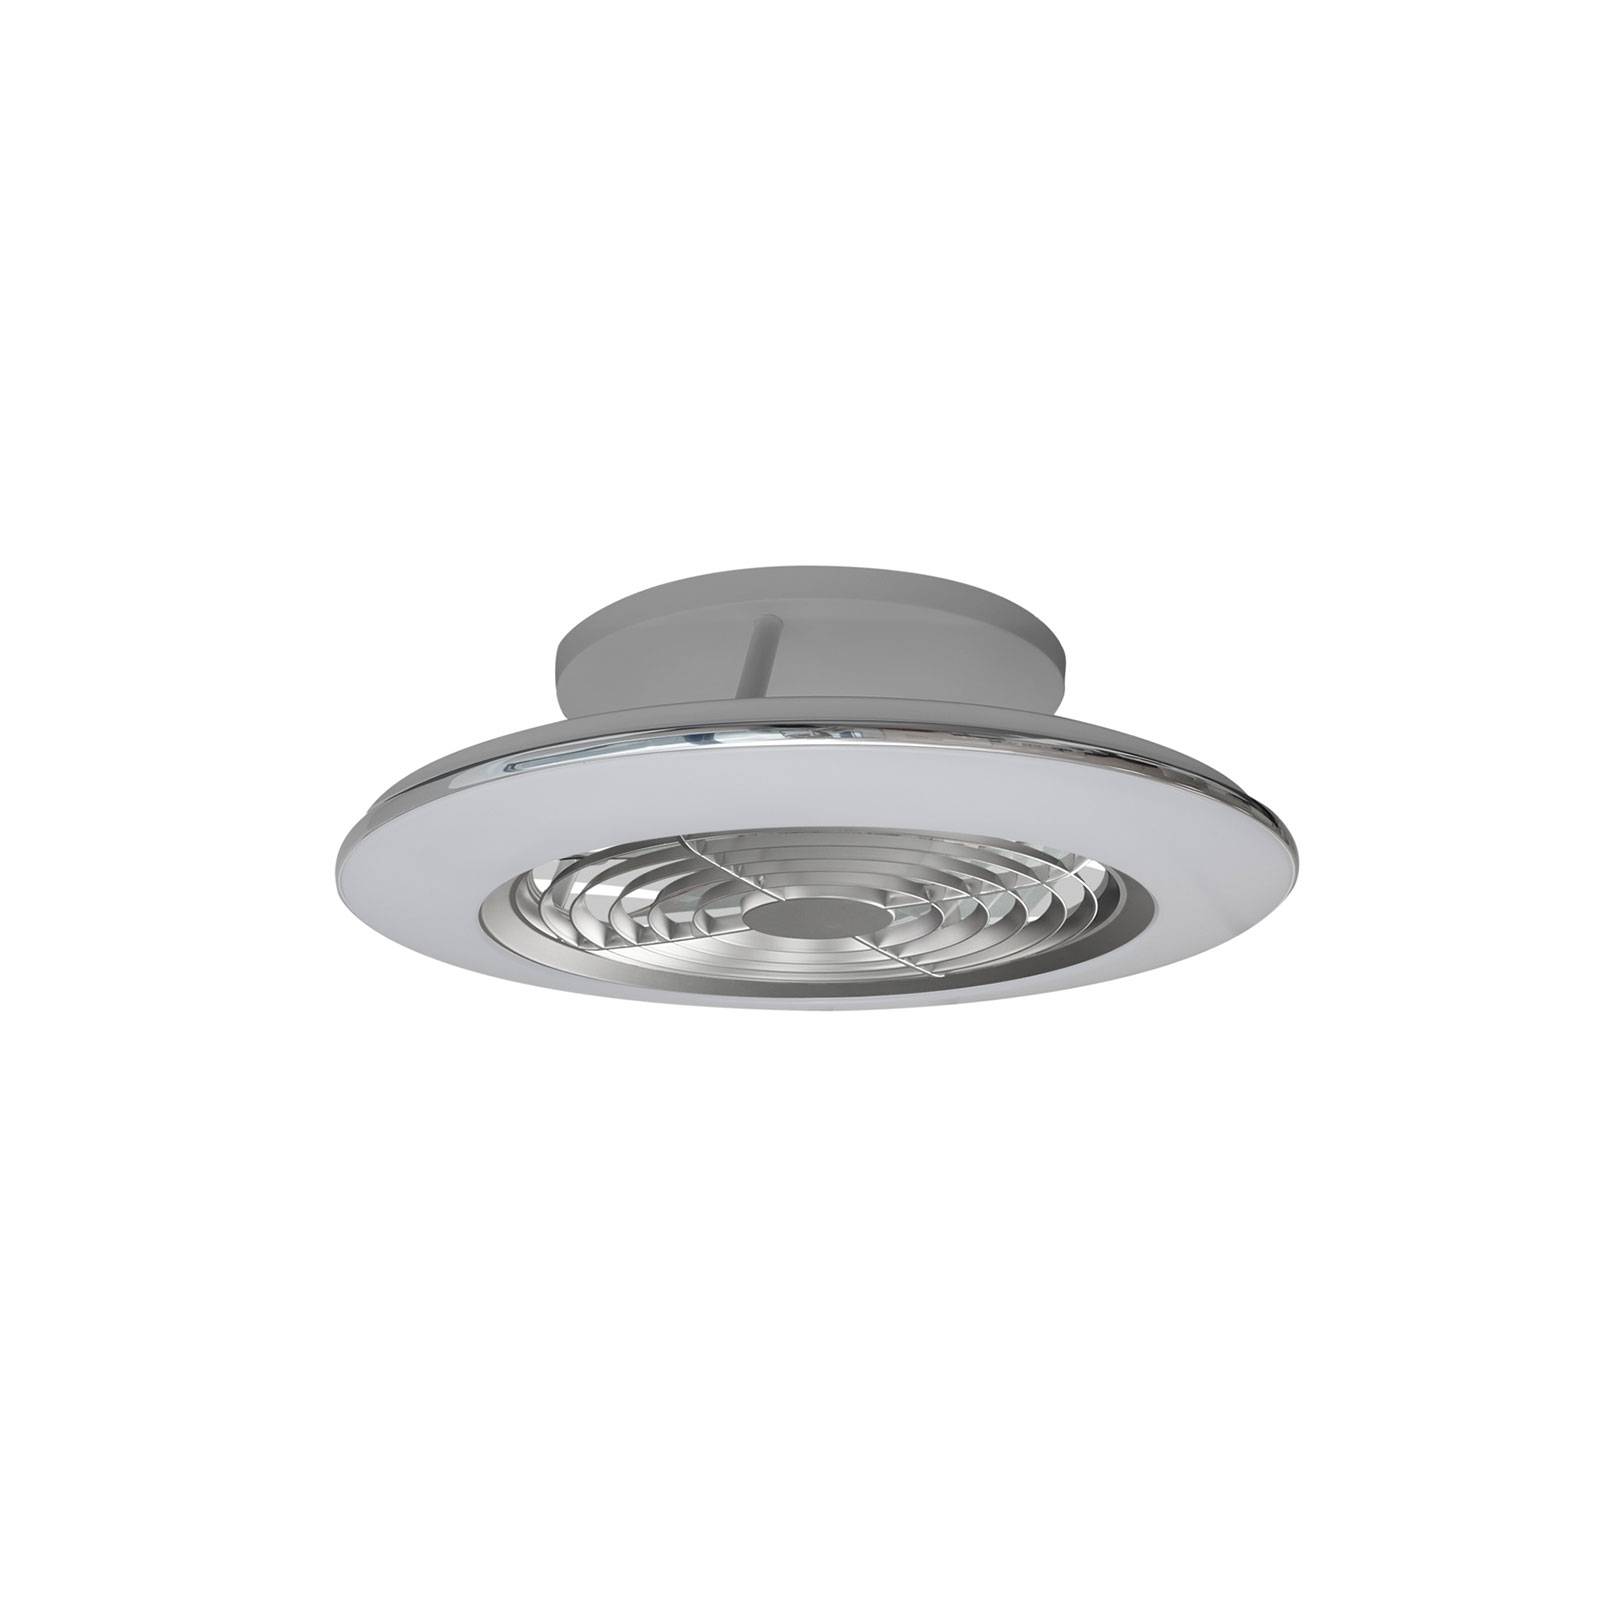 Image of Mantra Iluminación Ventilateur de plafond LED Alisio mini, argenté 8435153274947